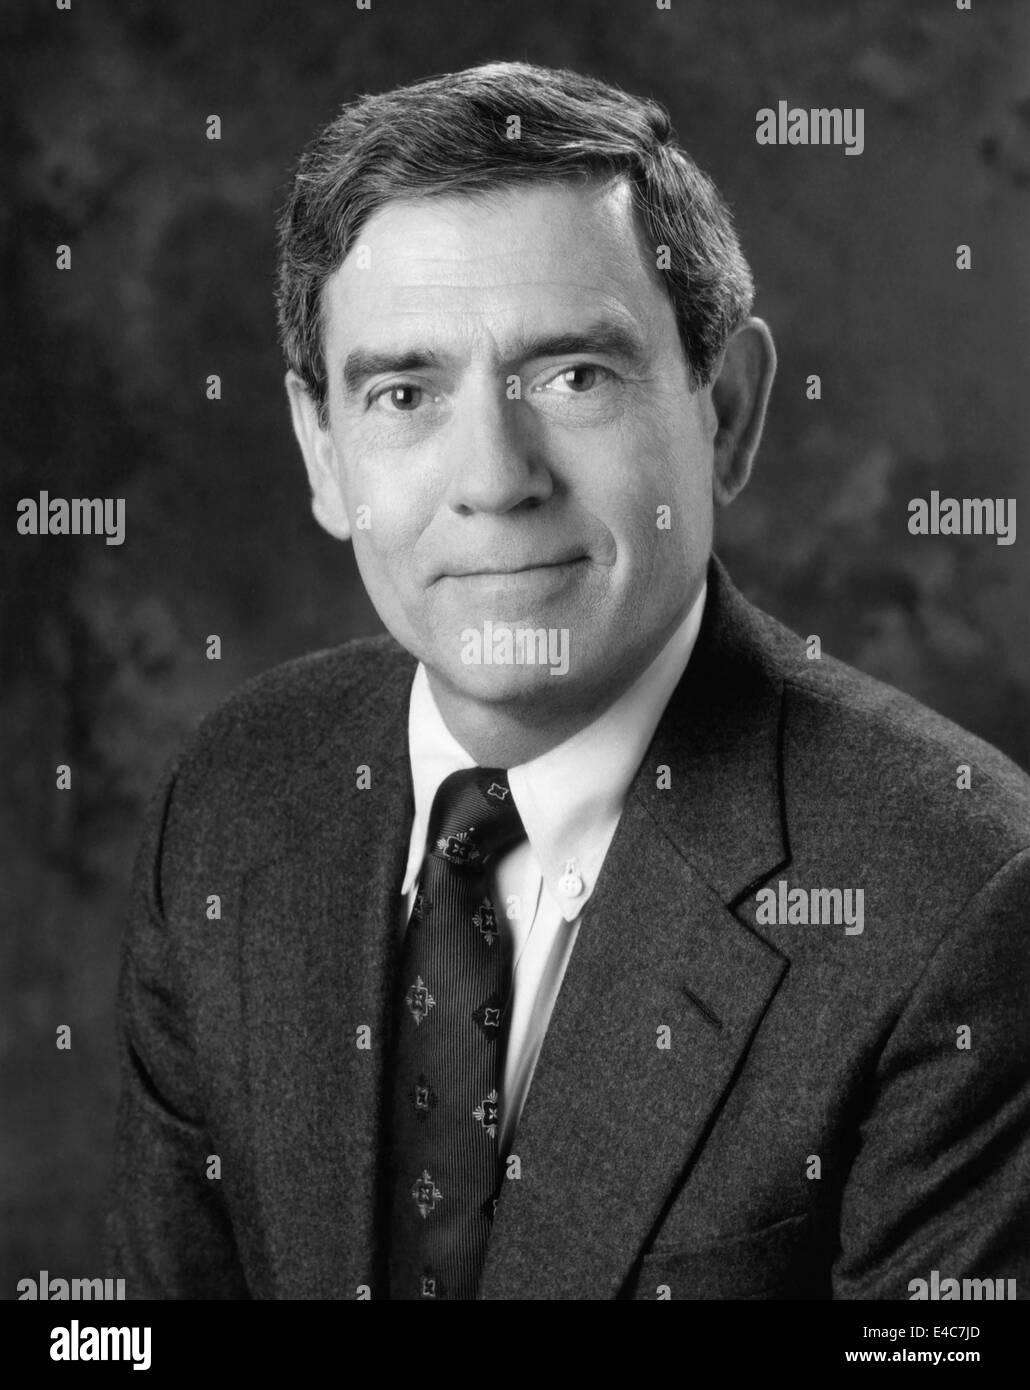 Dan lieber, US-amerikanischer Journalist, Porträt, ca. 1992 Stockfoto